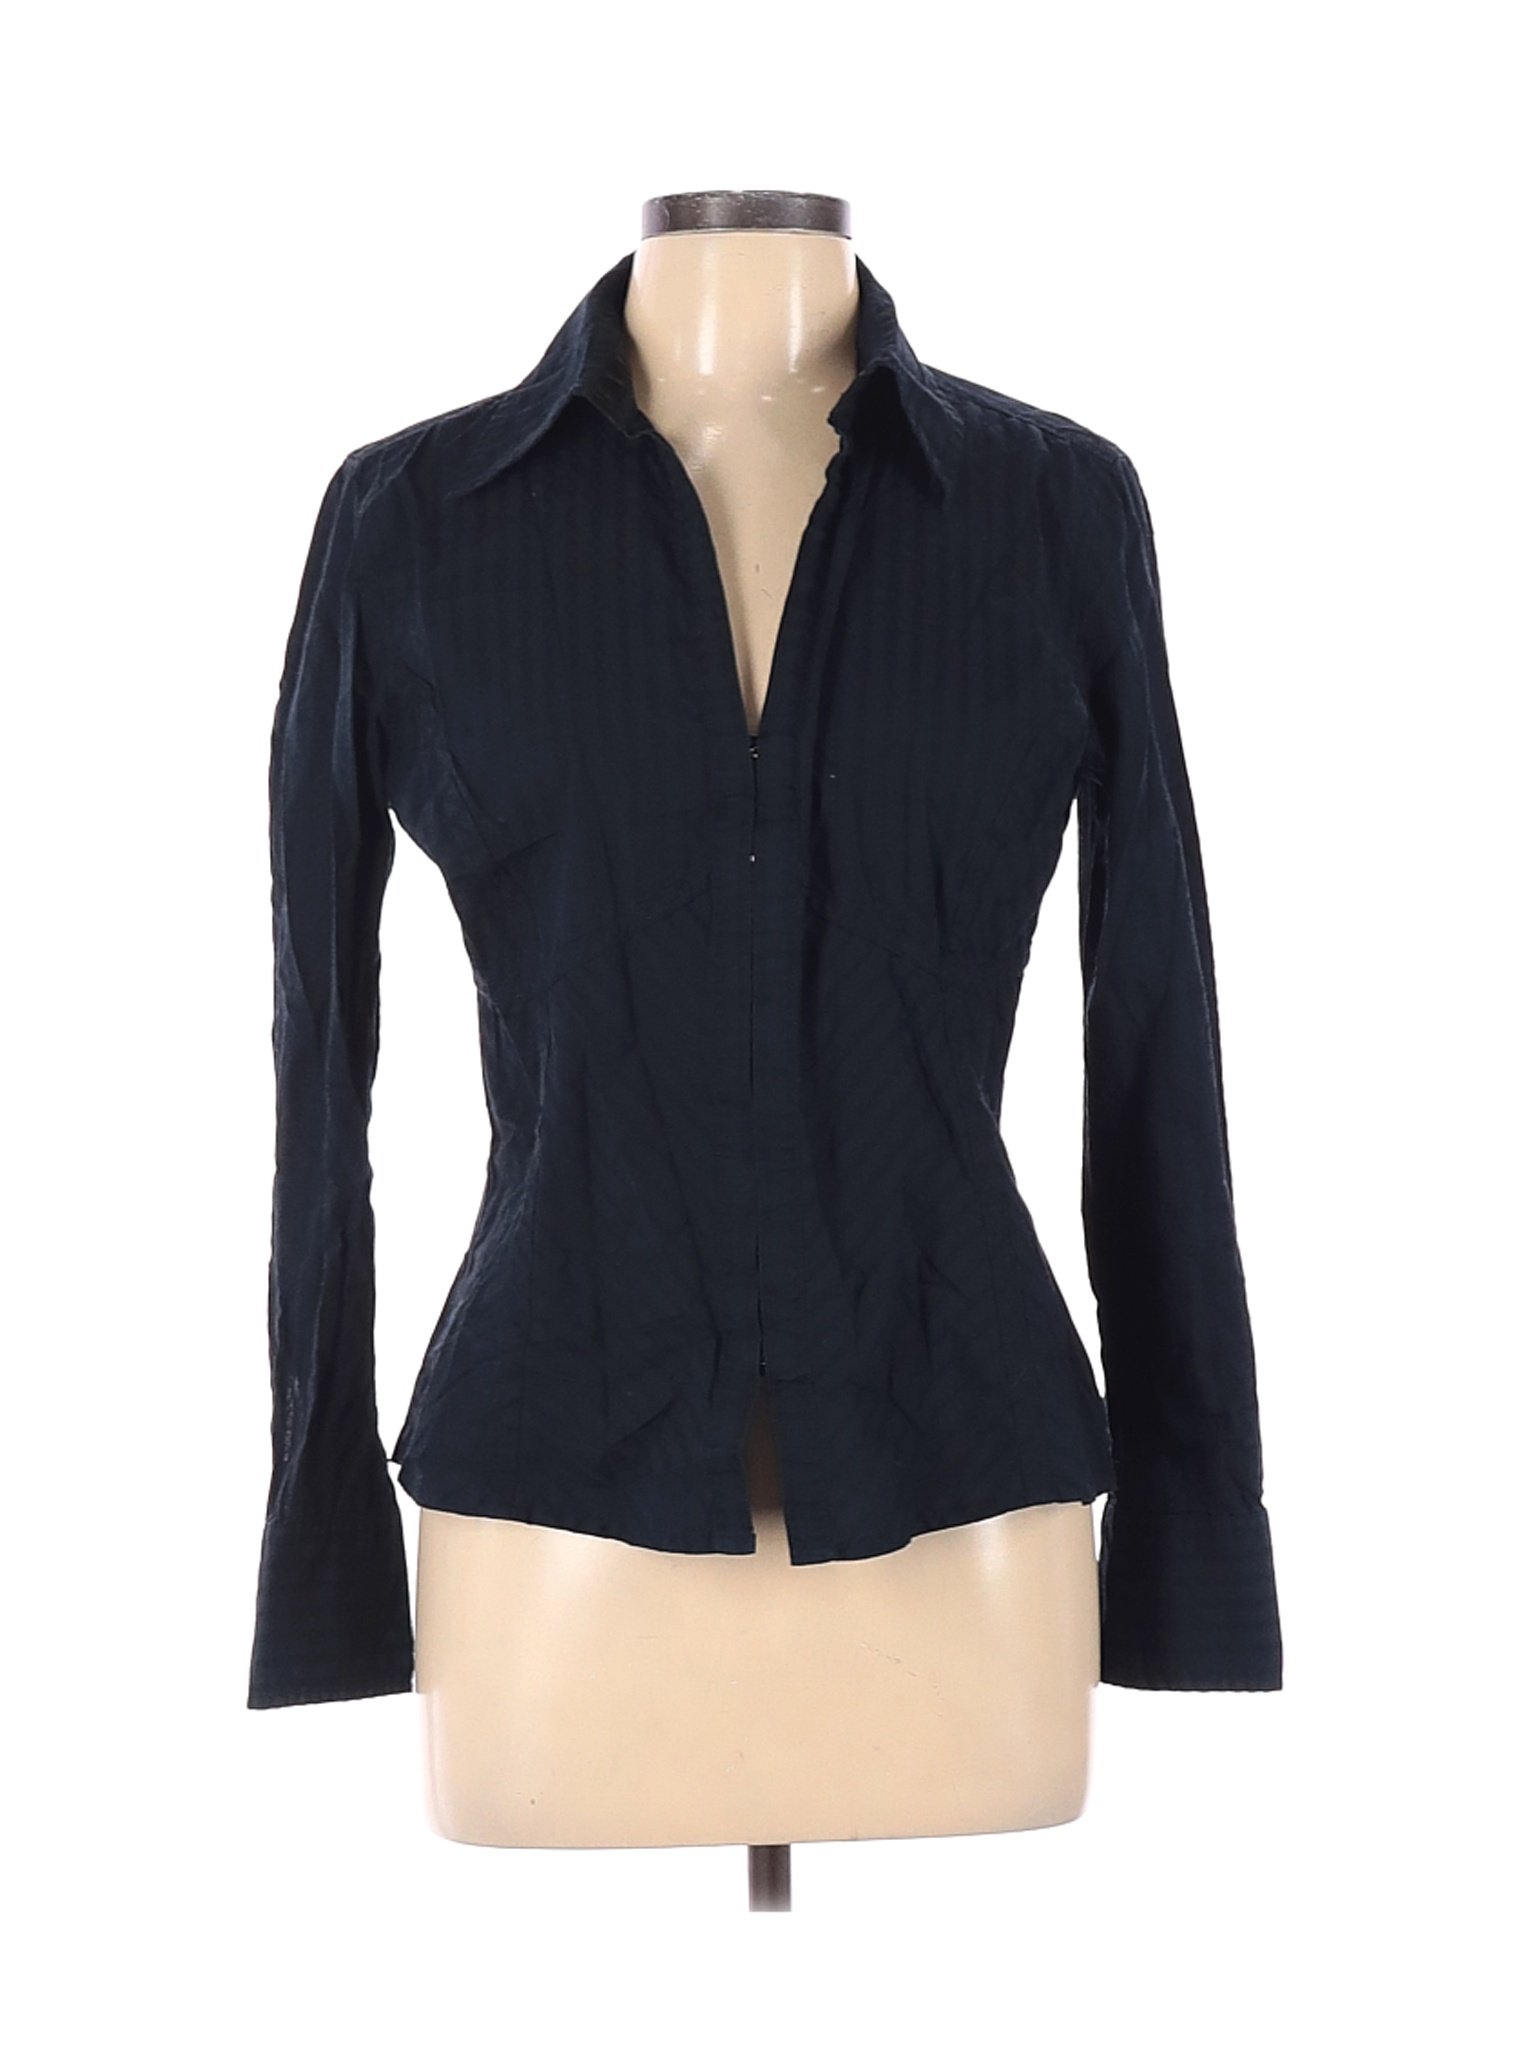 The Limited Women Black Long Sleeve Blouse L | eBay